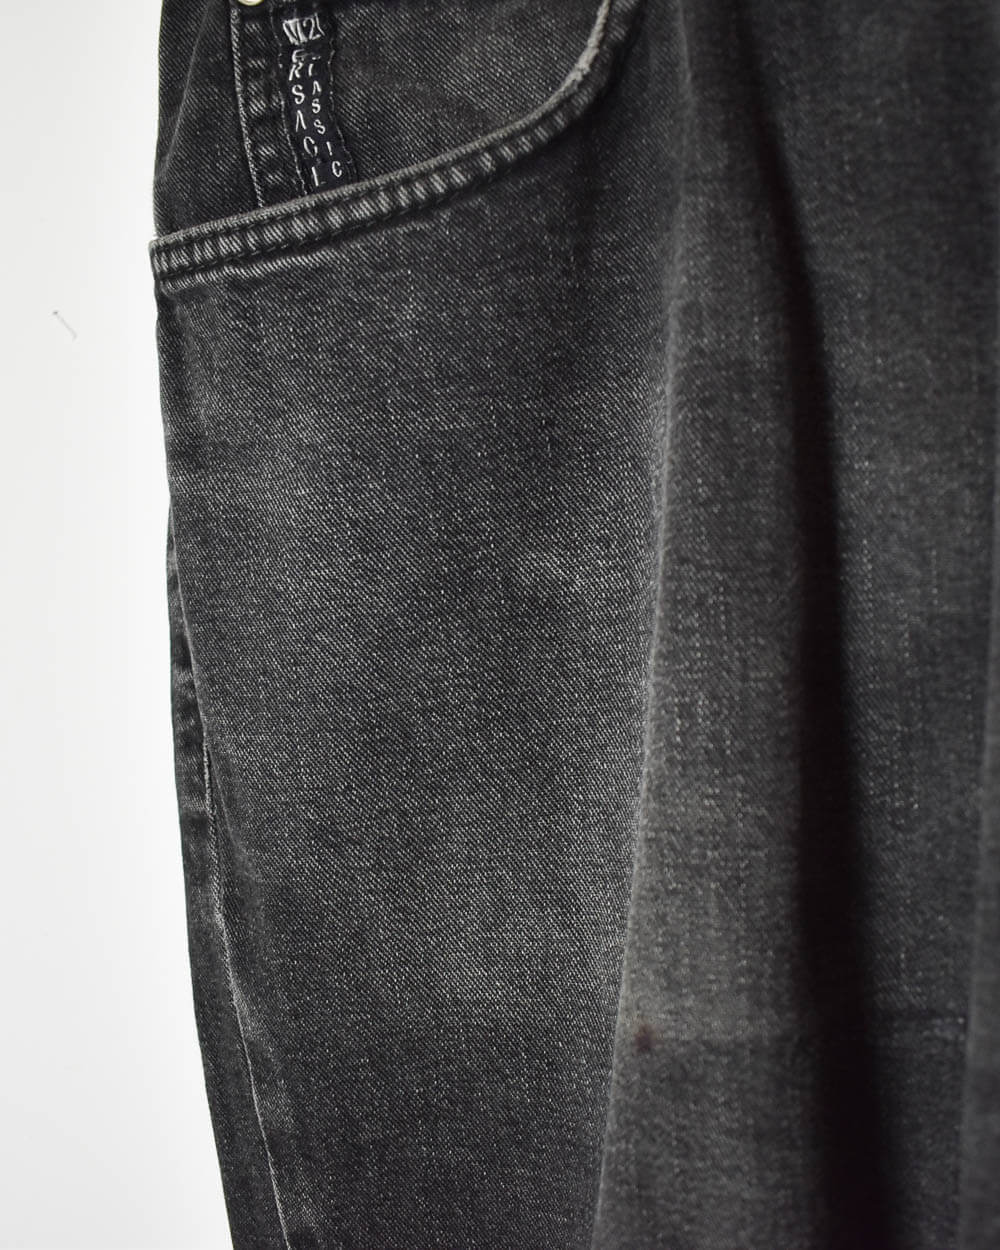 Black Versace Jeans - W38 L32